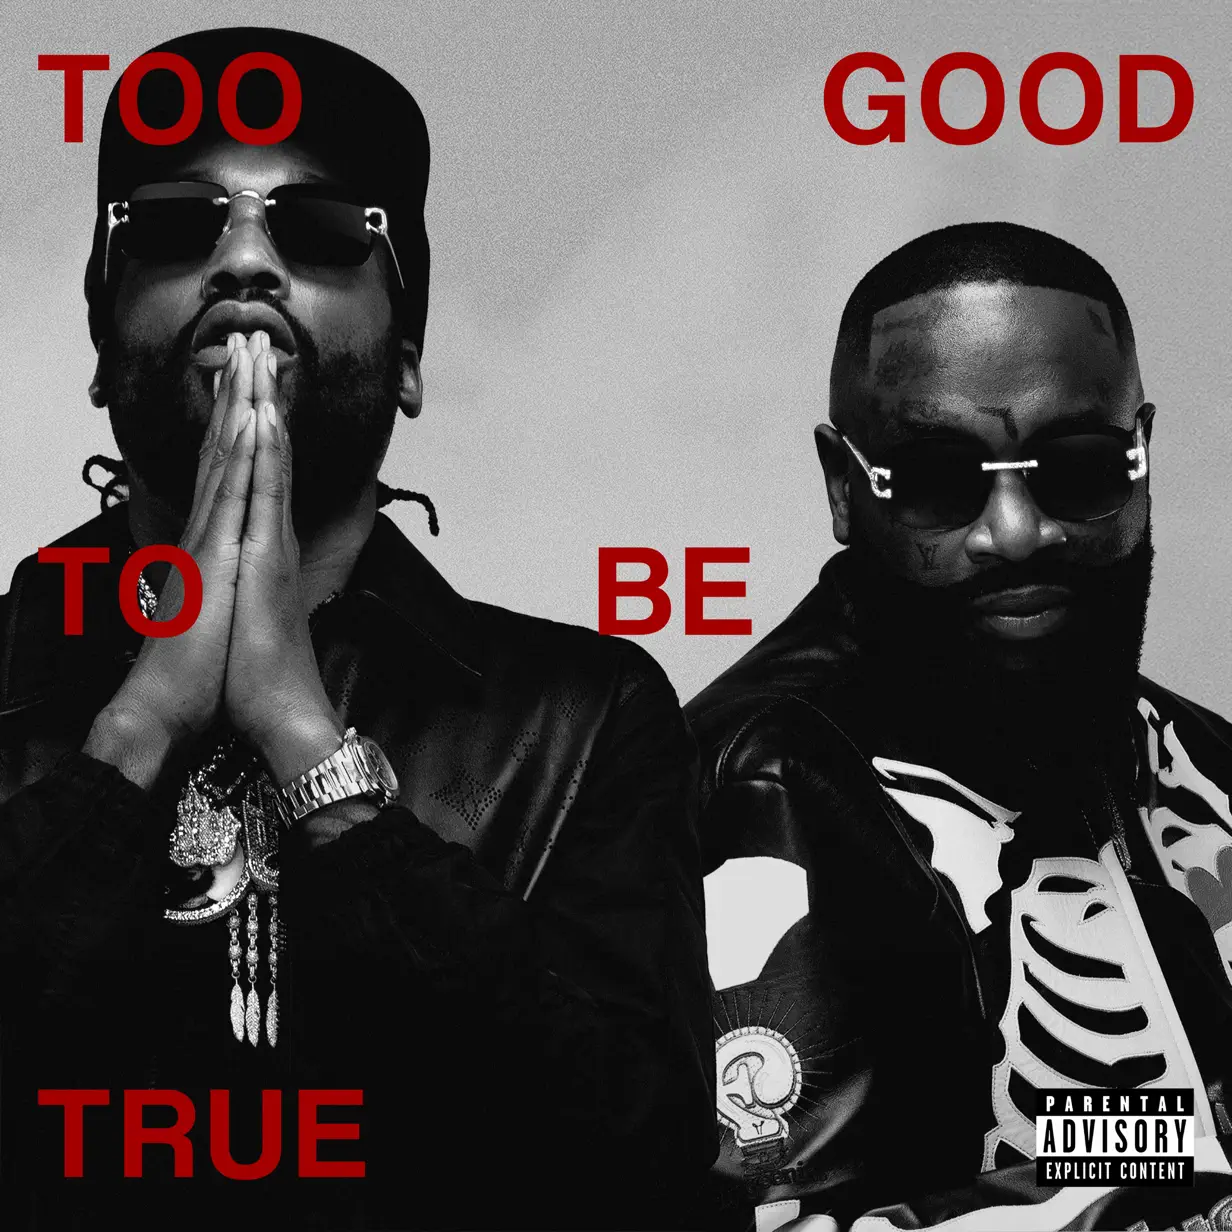 Rick Ross & Meek Mill’s “Too Good To Be True” Album Download Leak MP3 ZIP Files